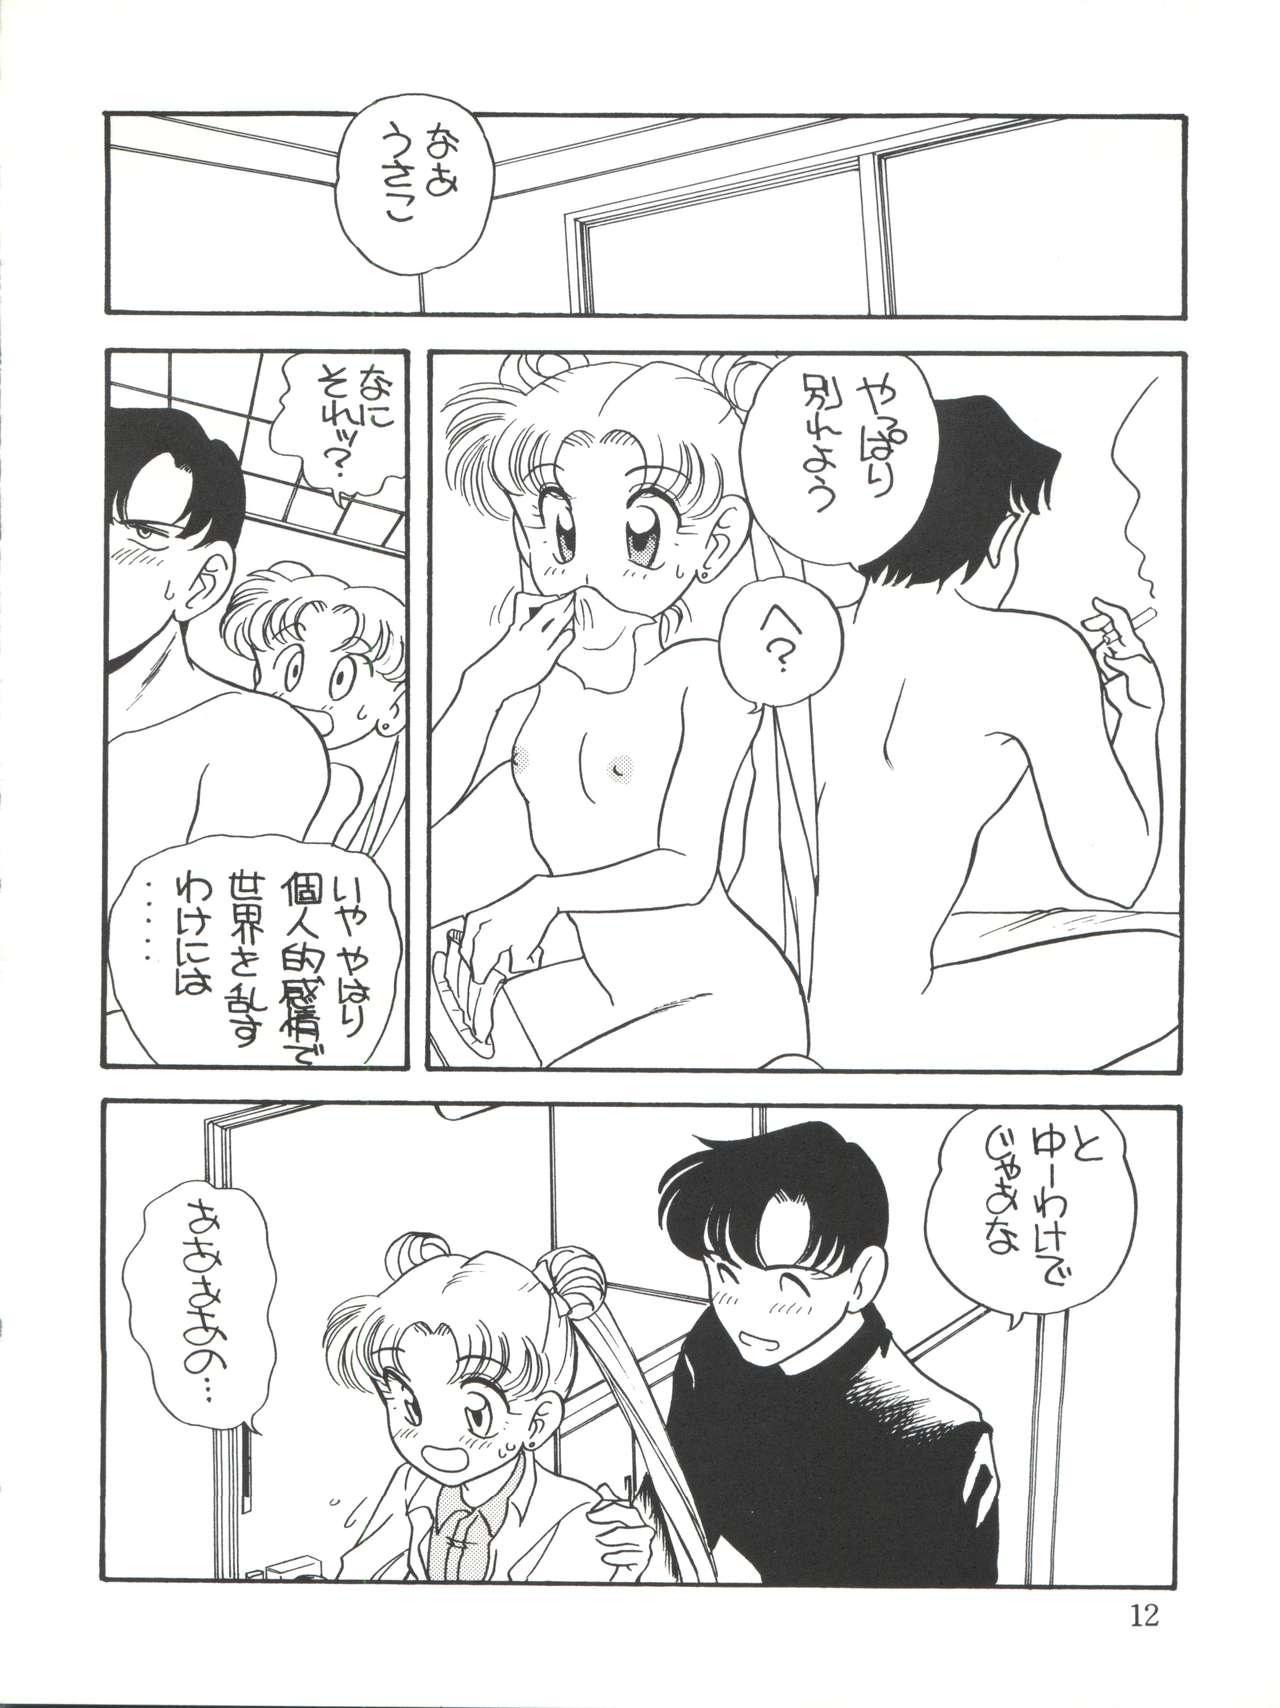 Submissive Elfin 9 - Sailor moon Satin - Page 12